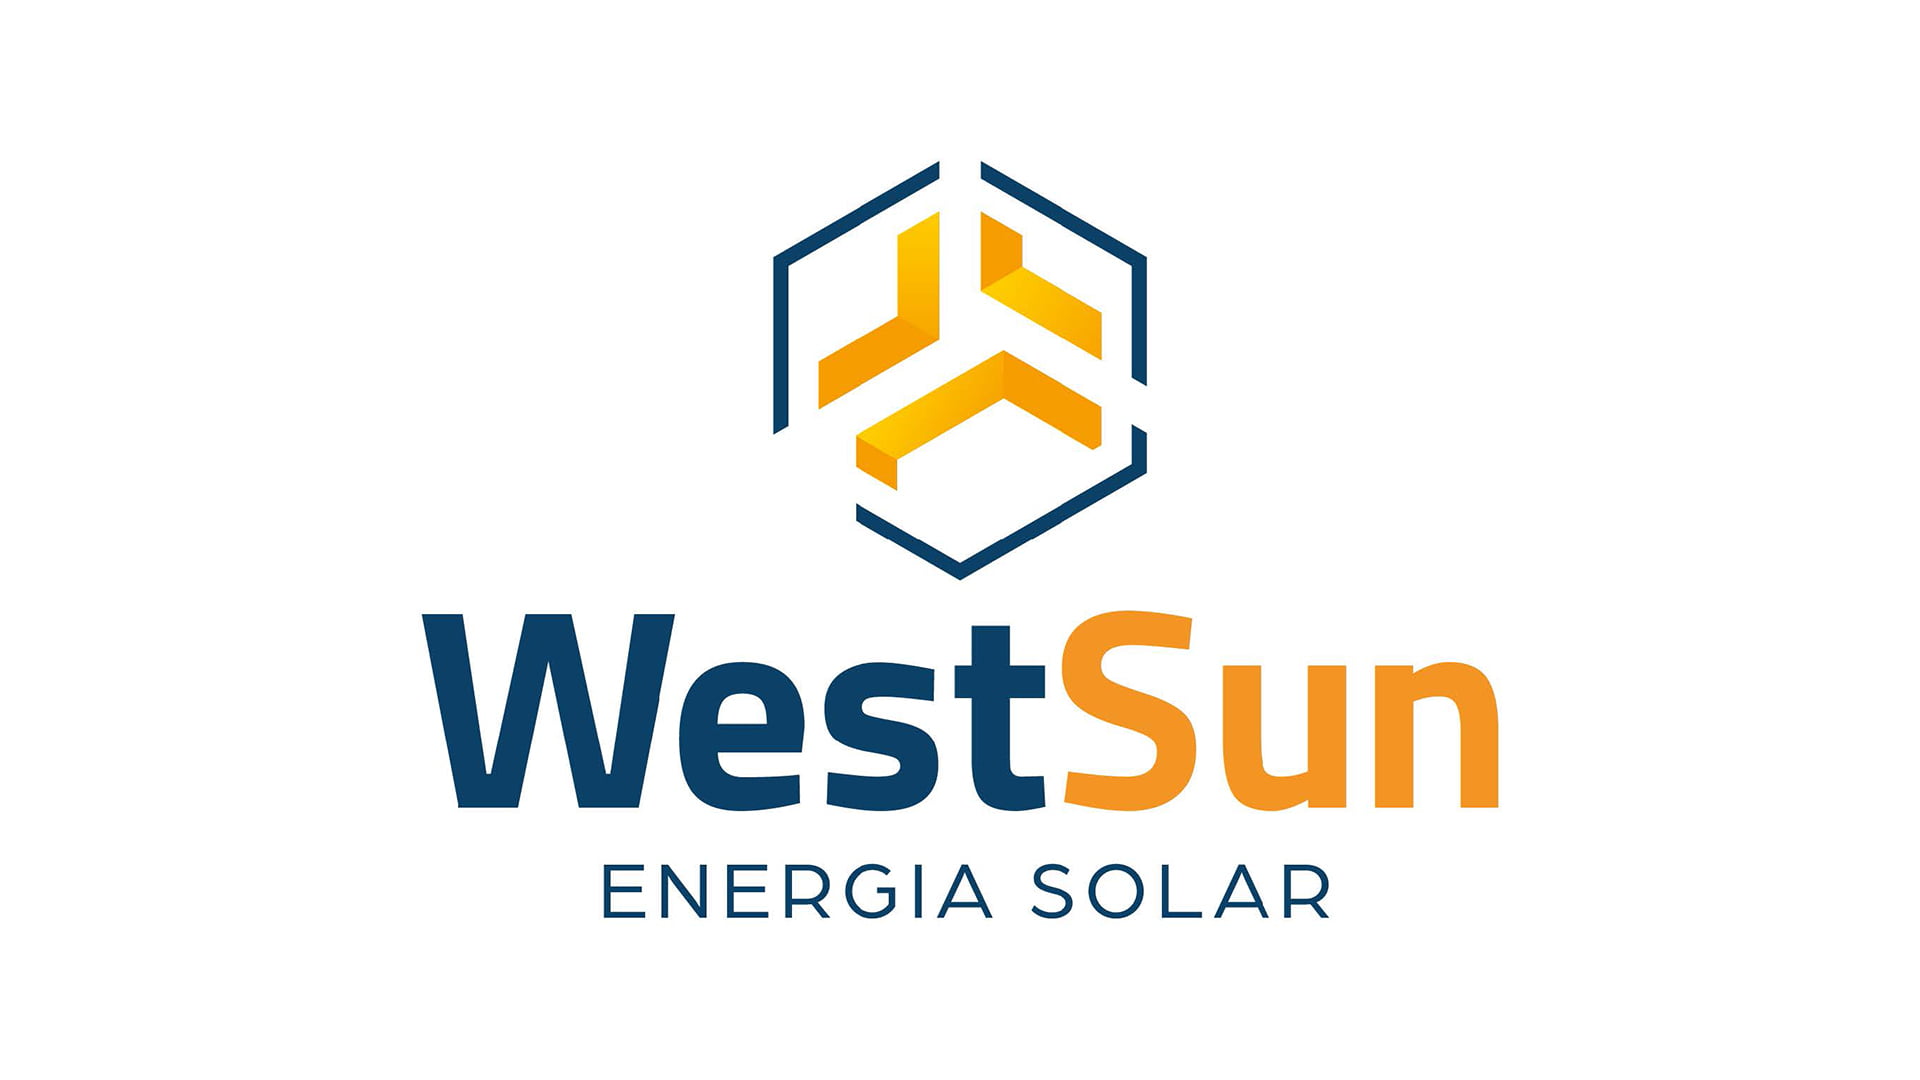 WestSun Energia Solar Identidade Visual